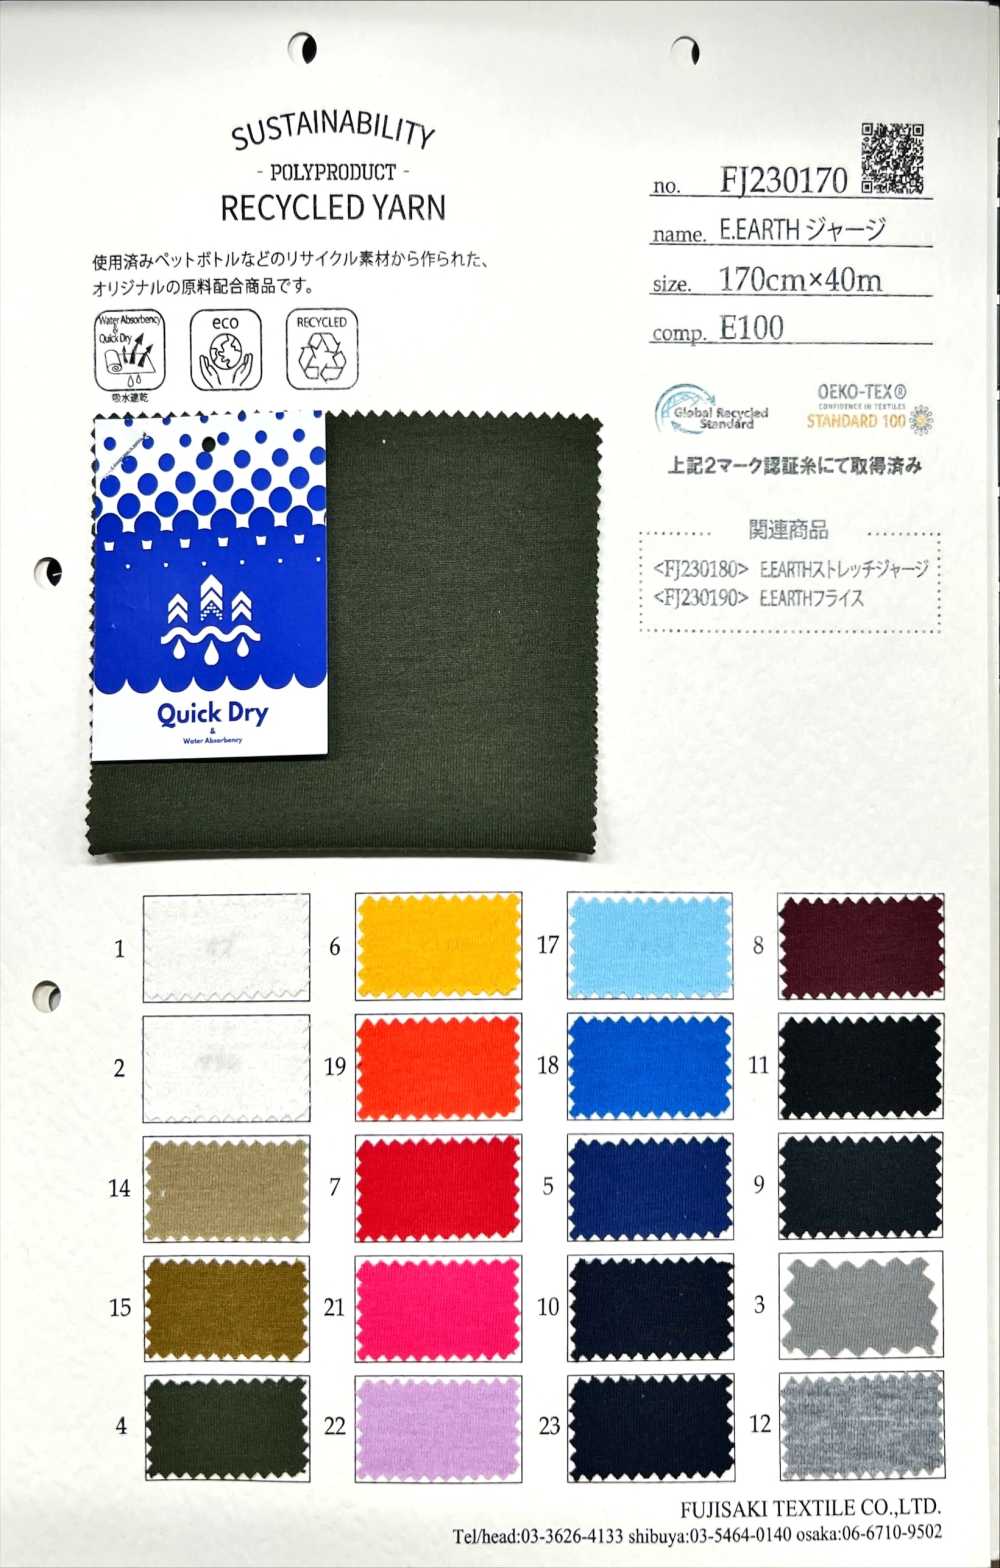 FJ230170 E.EARTH Jersey[Textile / Fabric] Fujisaki Textile